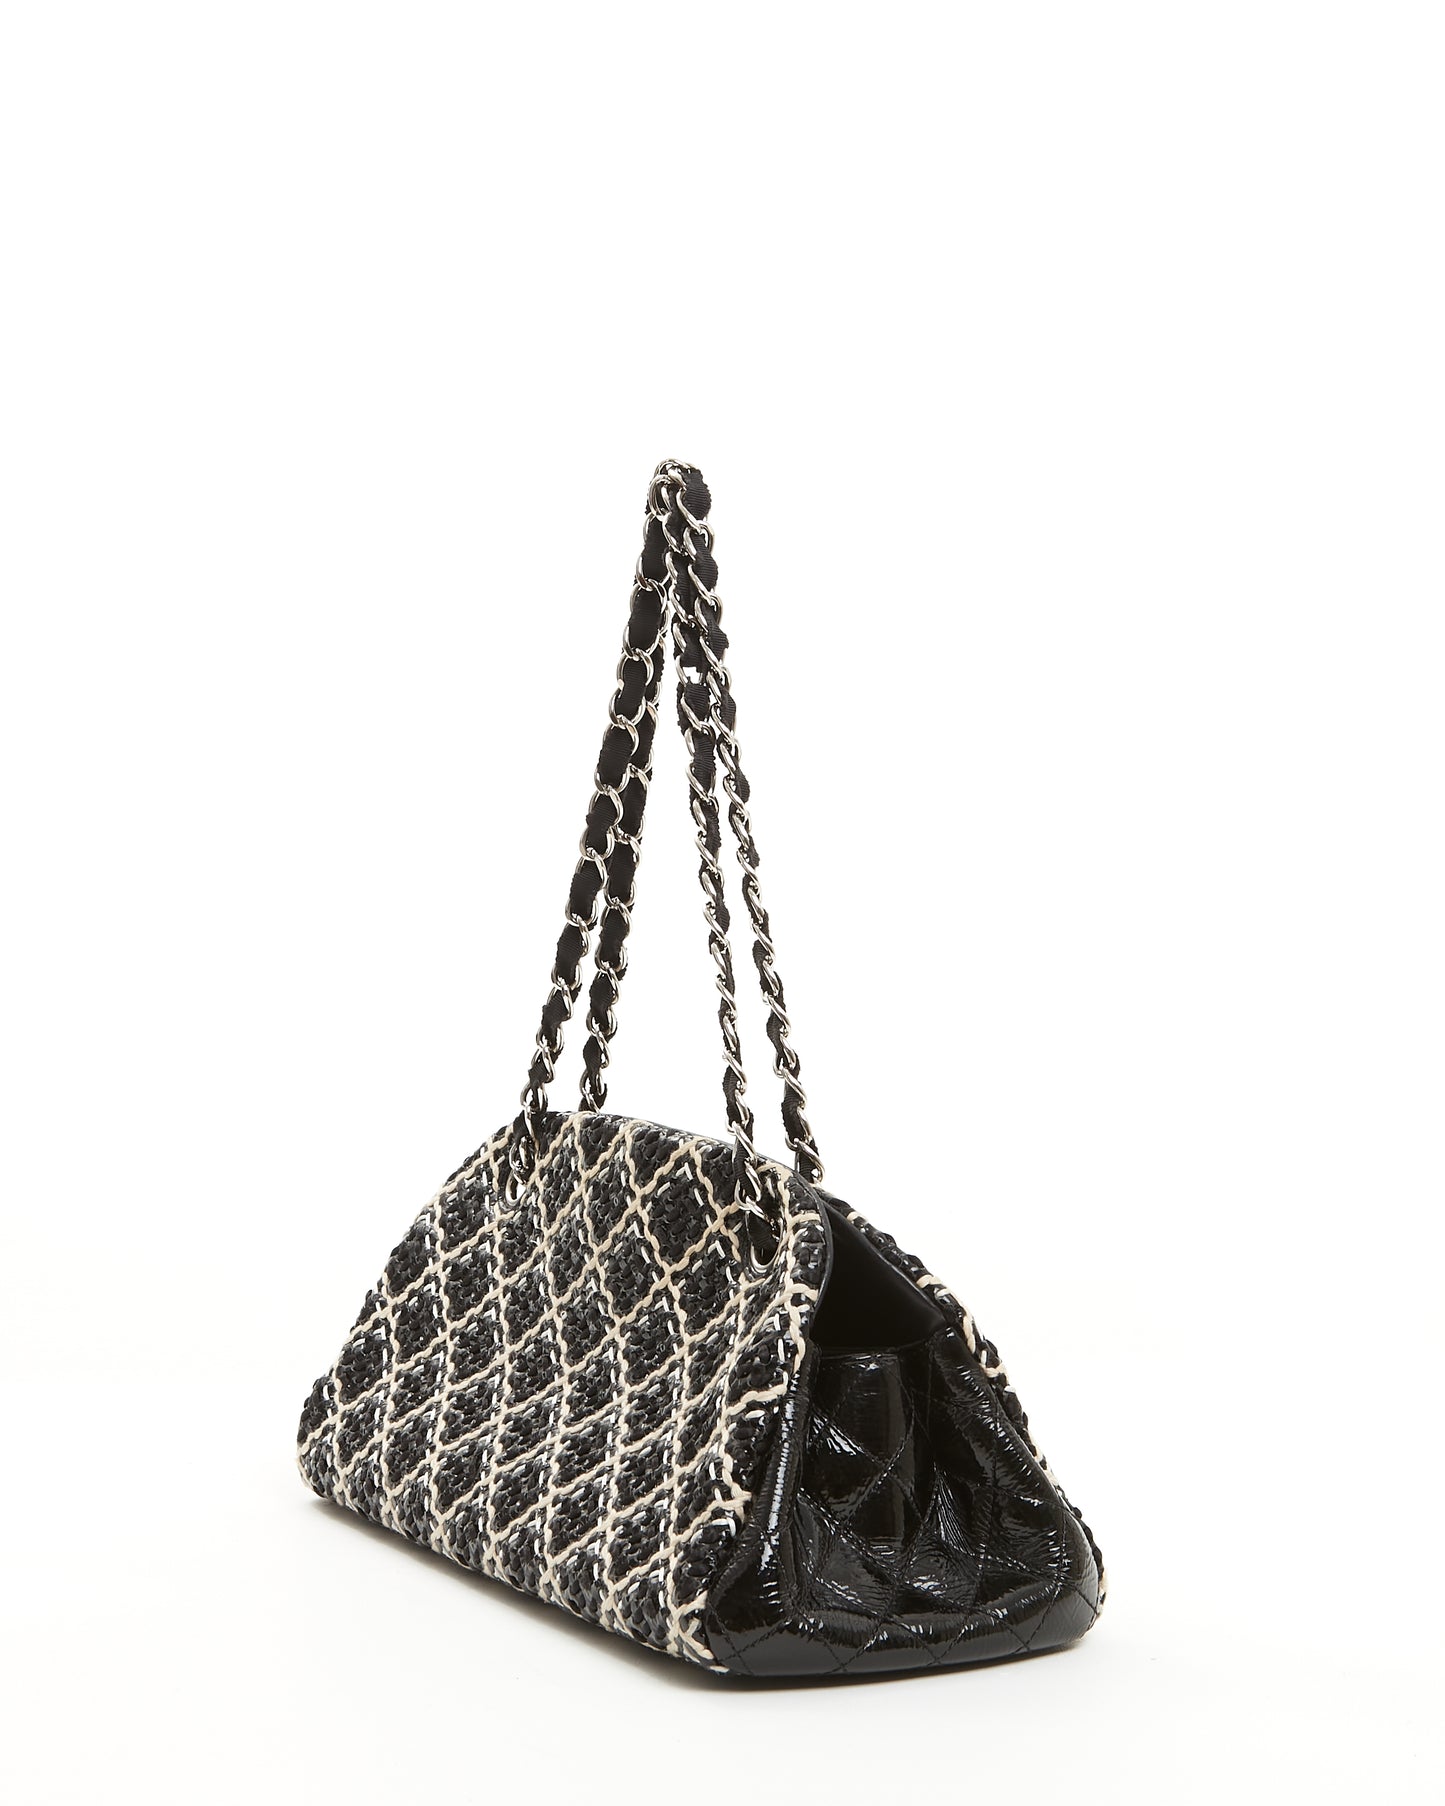 Chanel Black/White Tweed Patent Leather Bowling Shoulder Bag